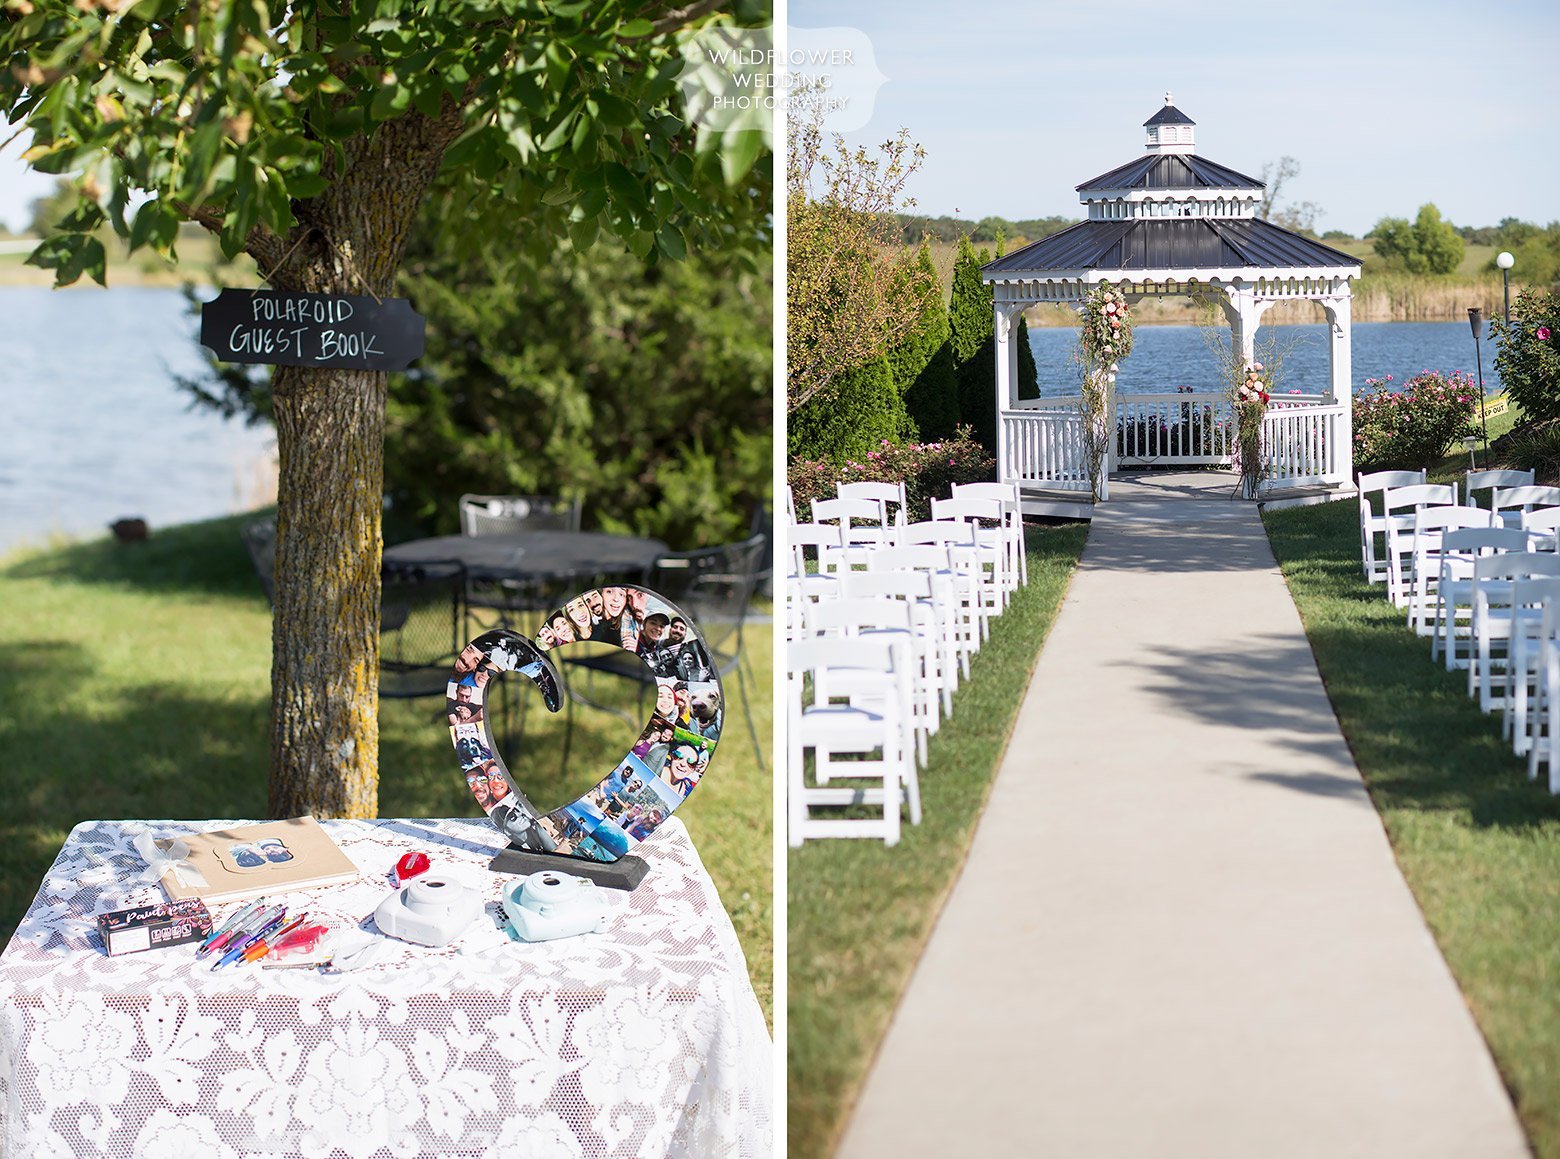 Outdoor gazebo wedding ceremony venue at Serenity Valley Winery in Fulton.